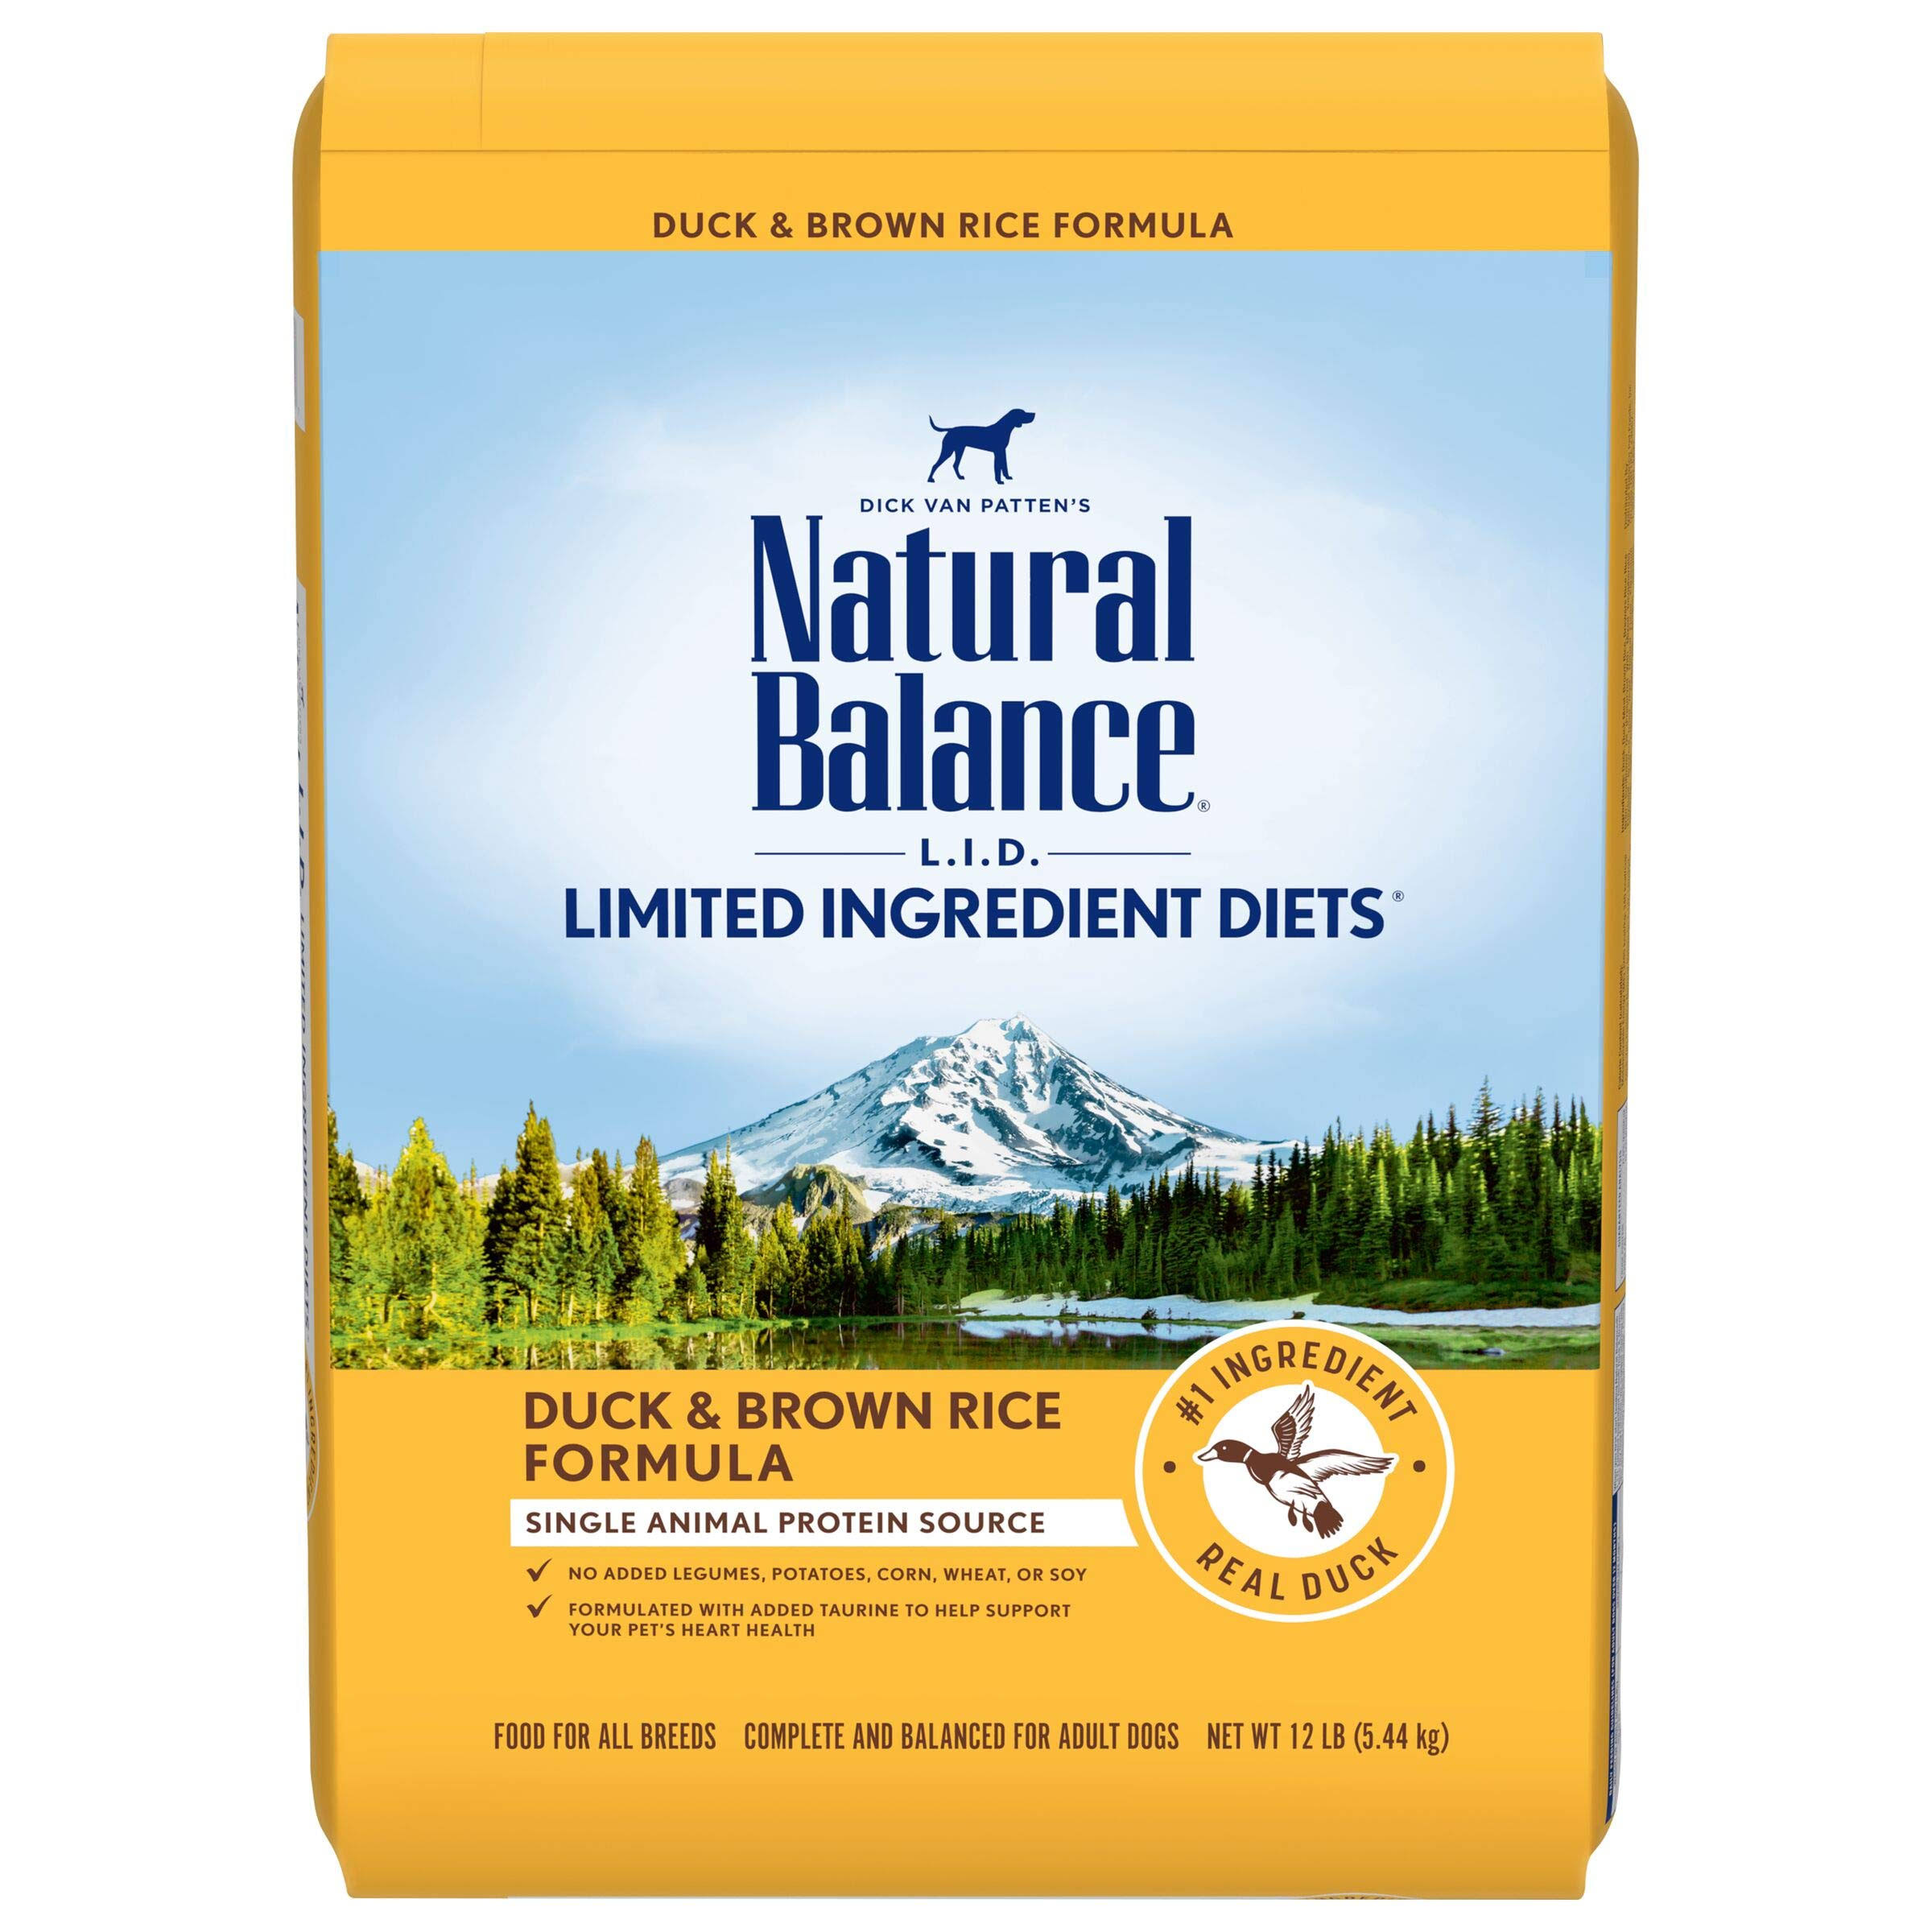 Natural Balance Limited Ingredient Diets Dog Food, Duck & Brown Rice Formula - 12 lb